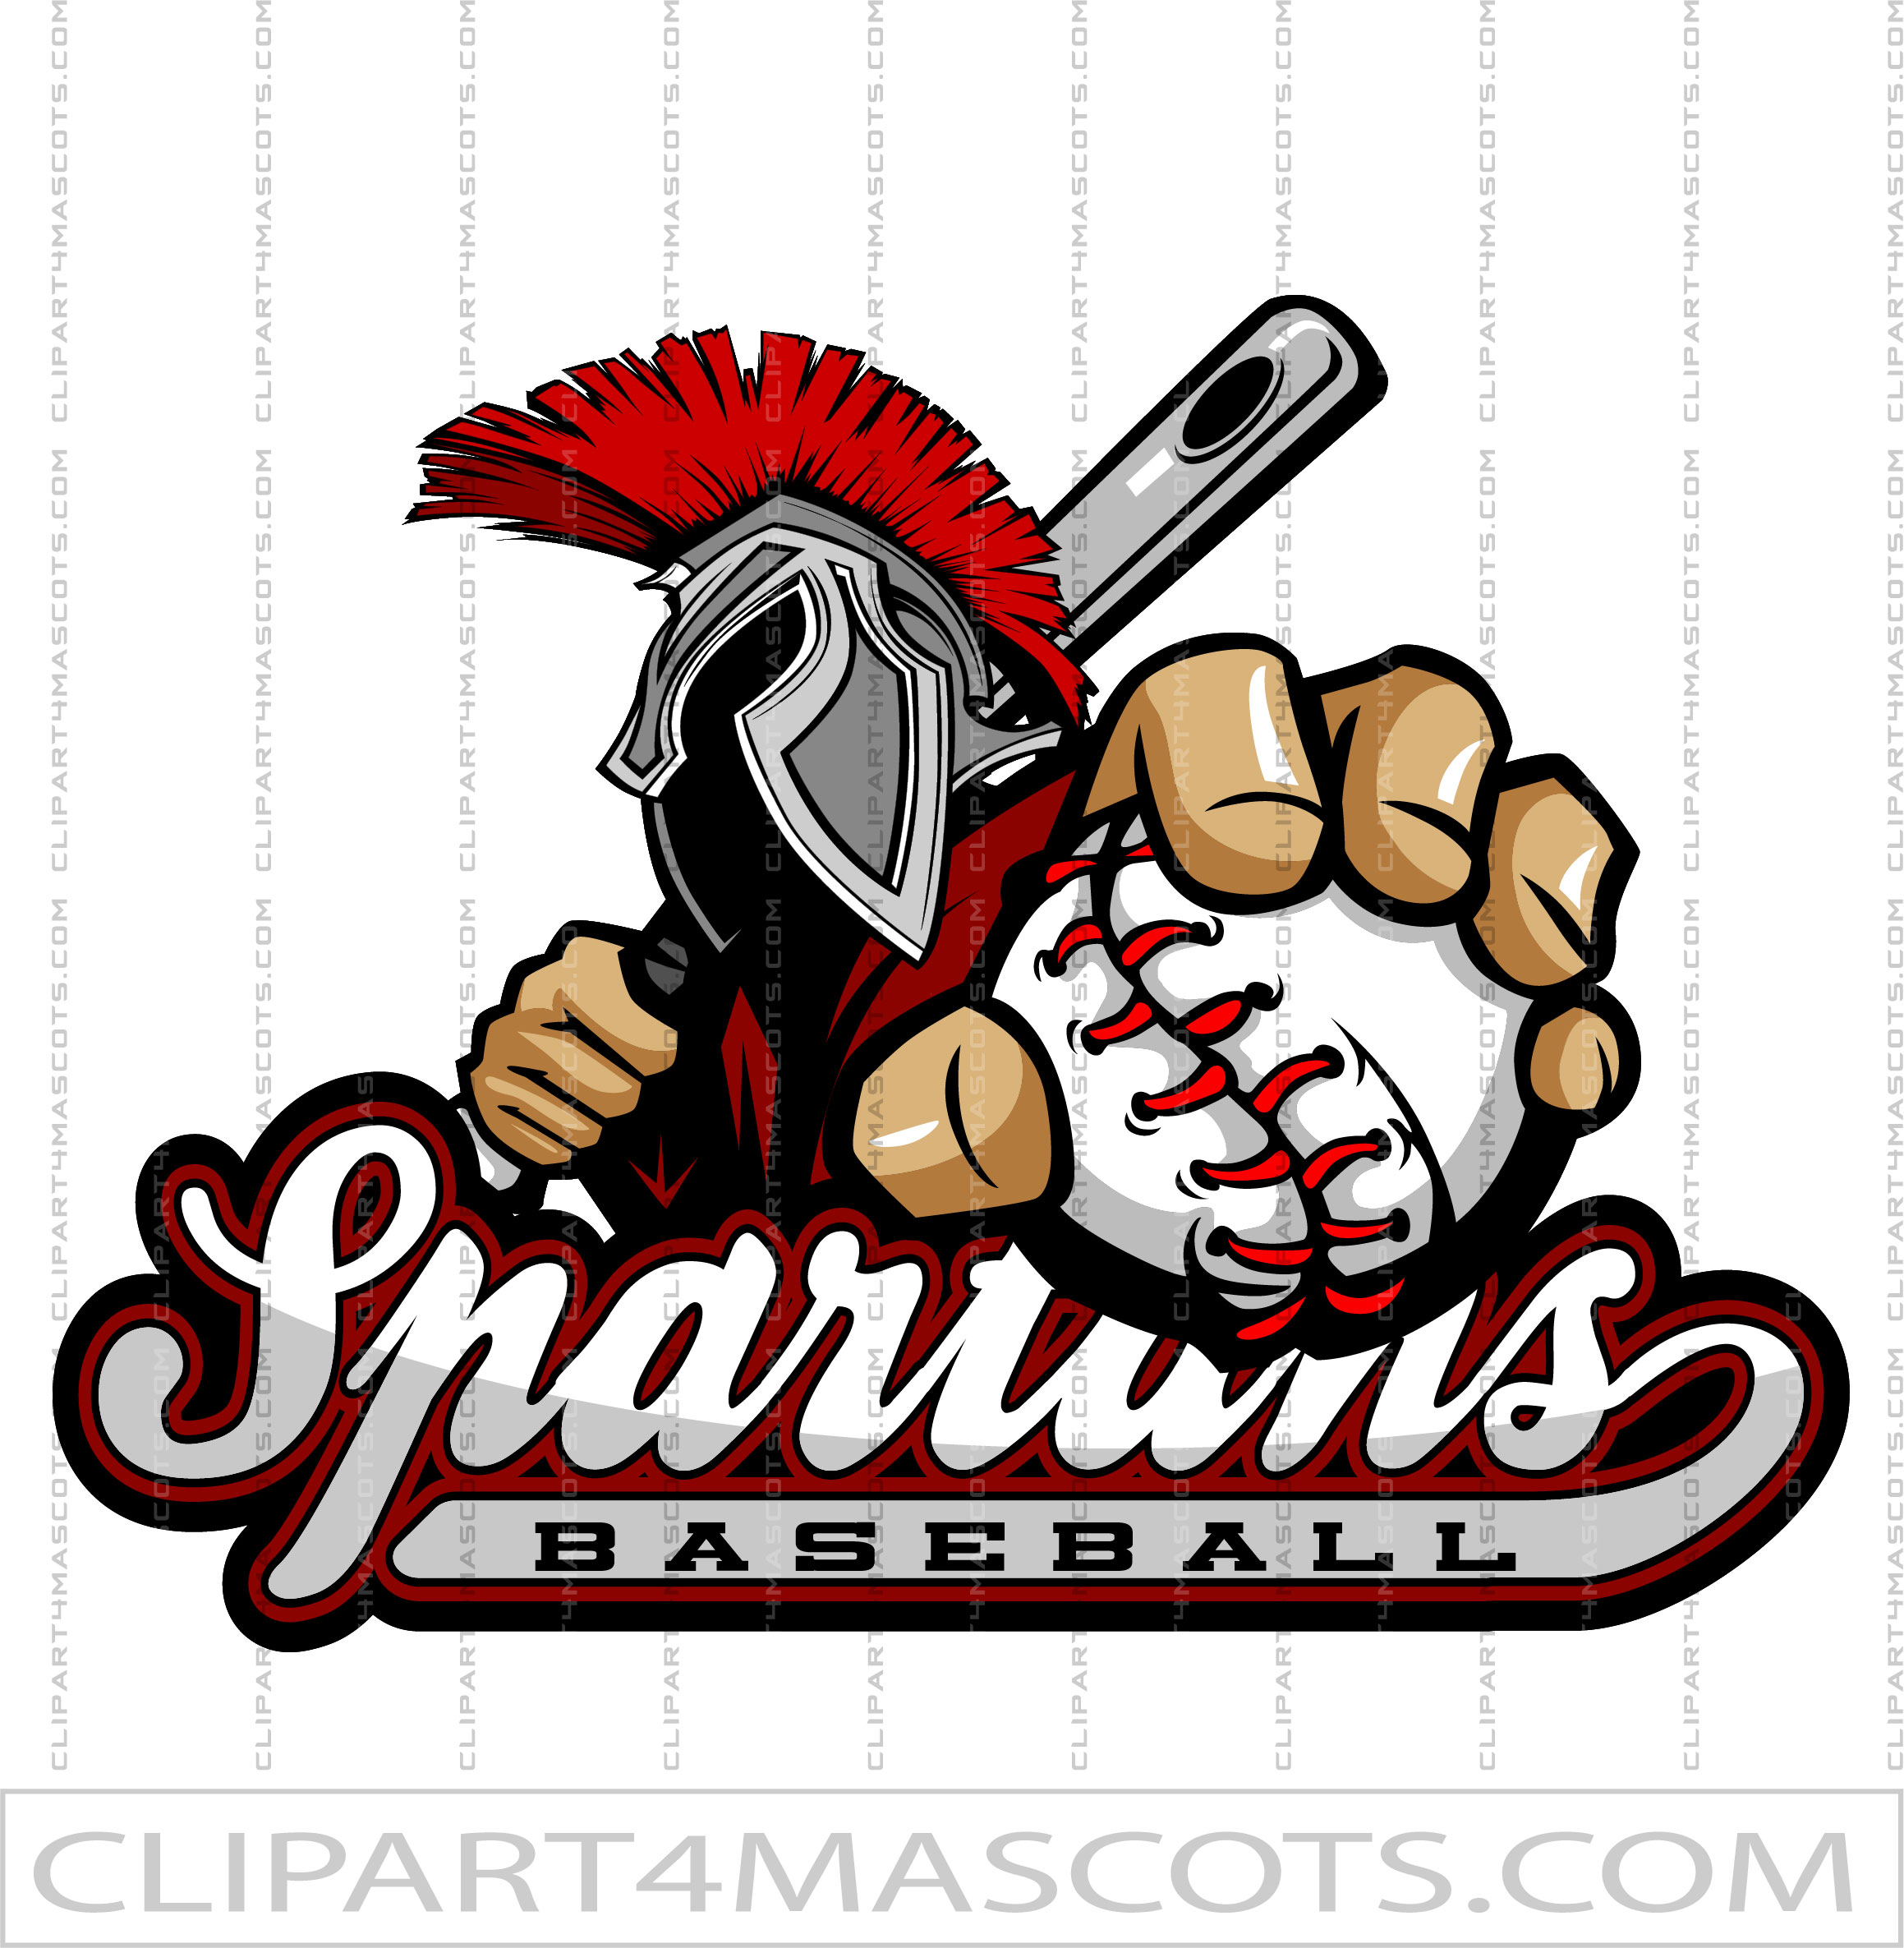 Spartan Baseball Pin Graphic